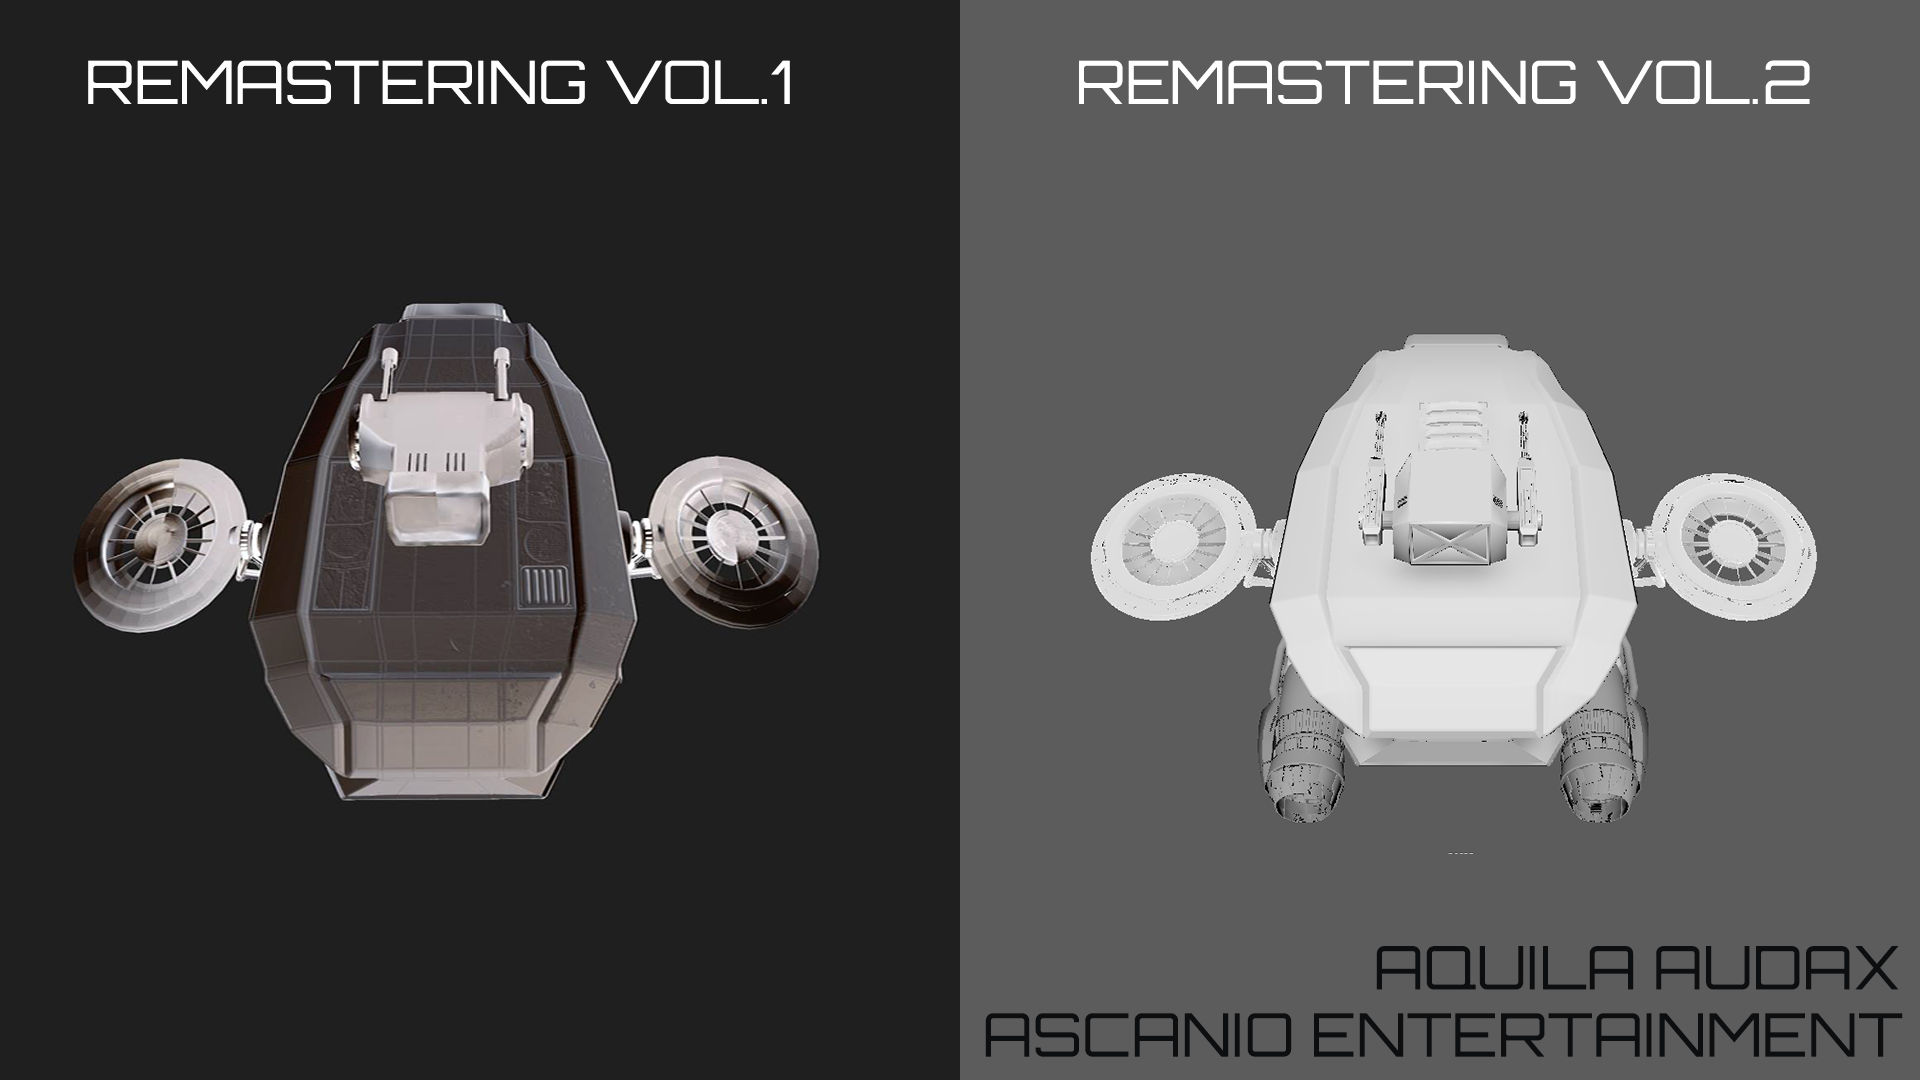 Aquila Audax comparison picture for the remastering